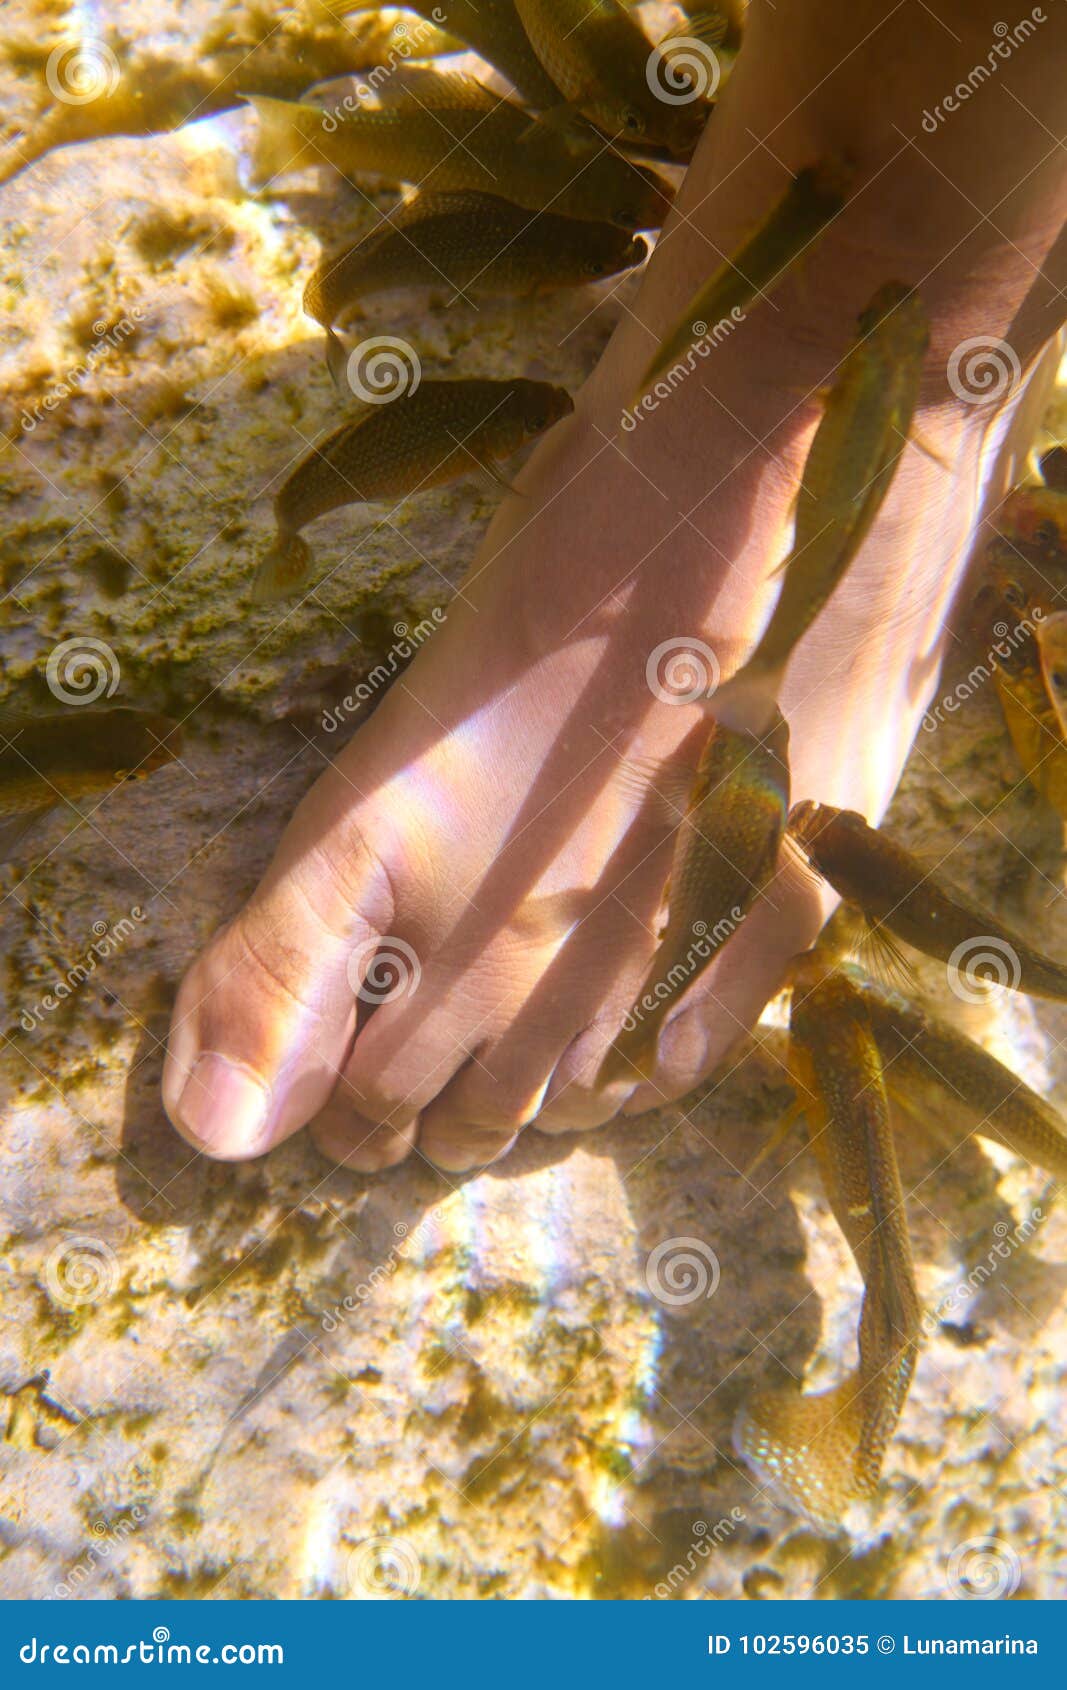 cenotes mexico fishes suck feet dead skin